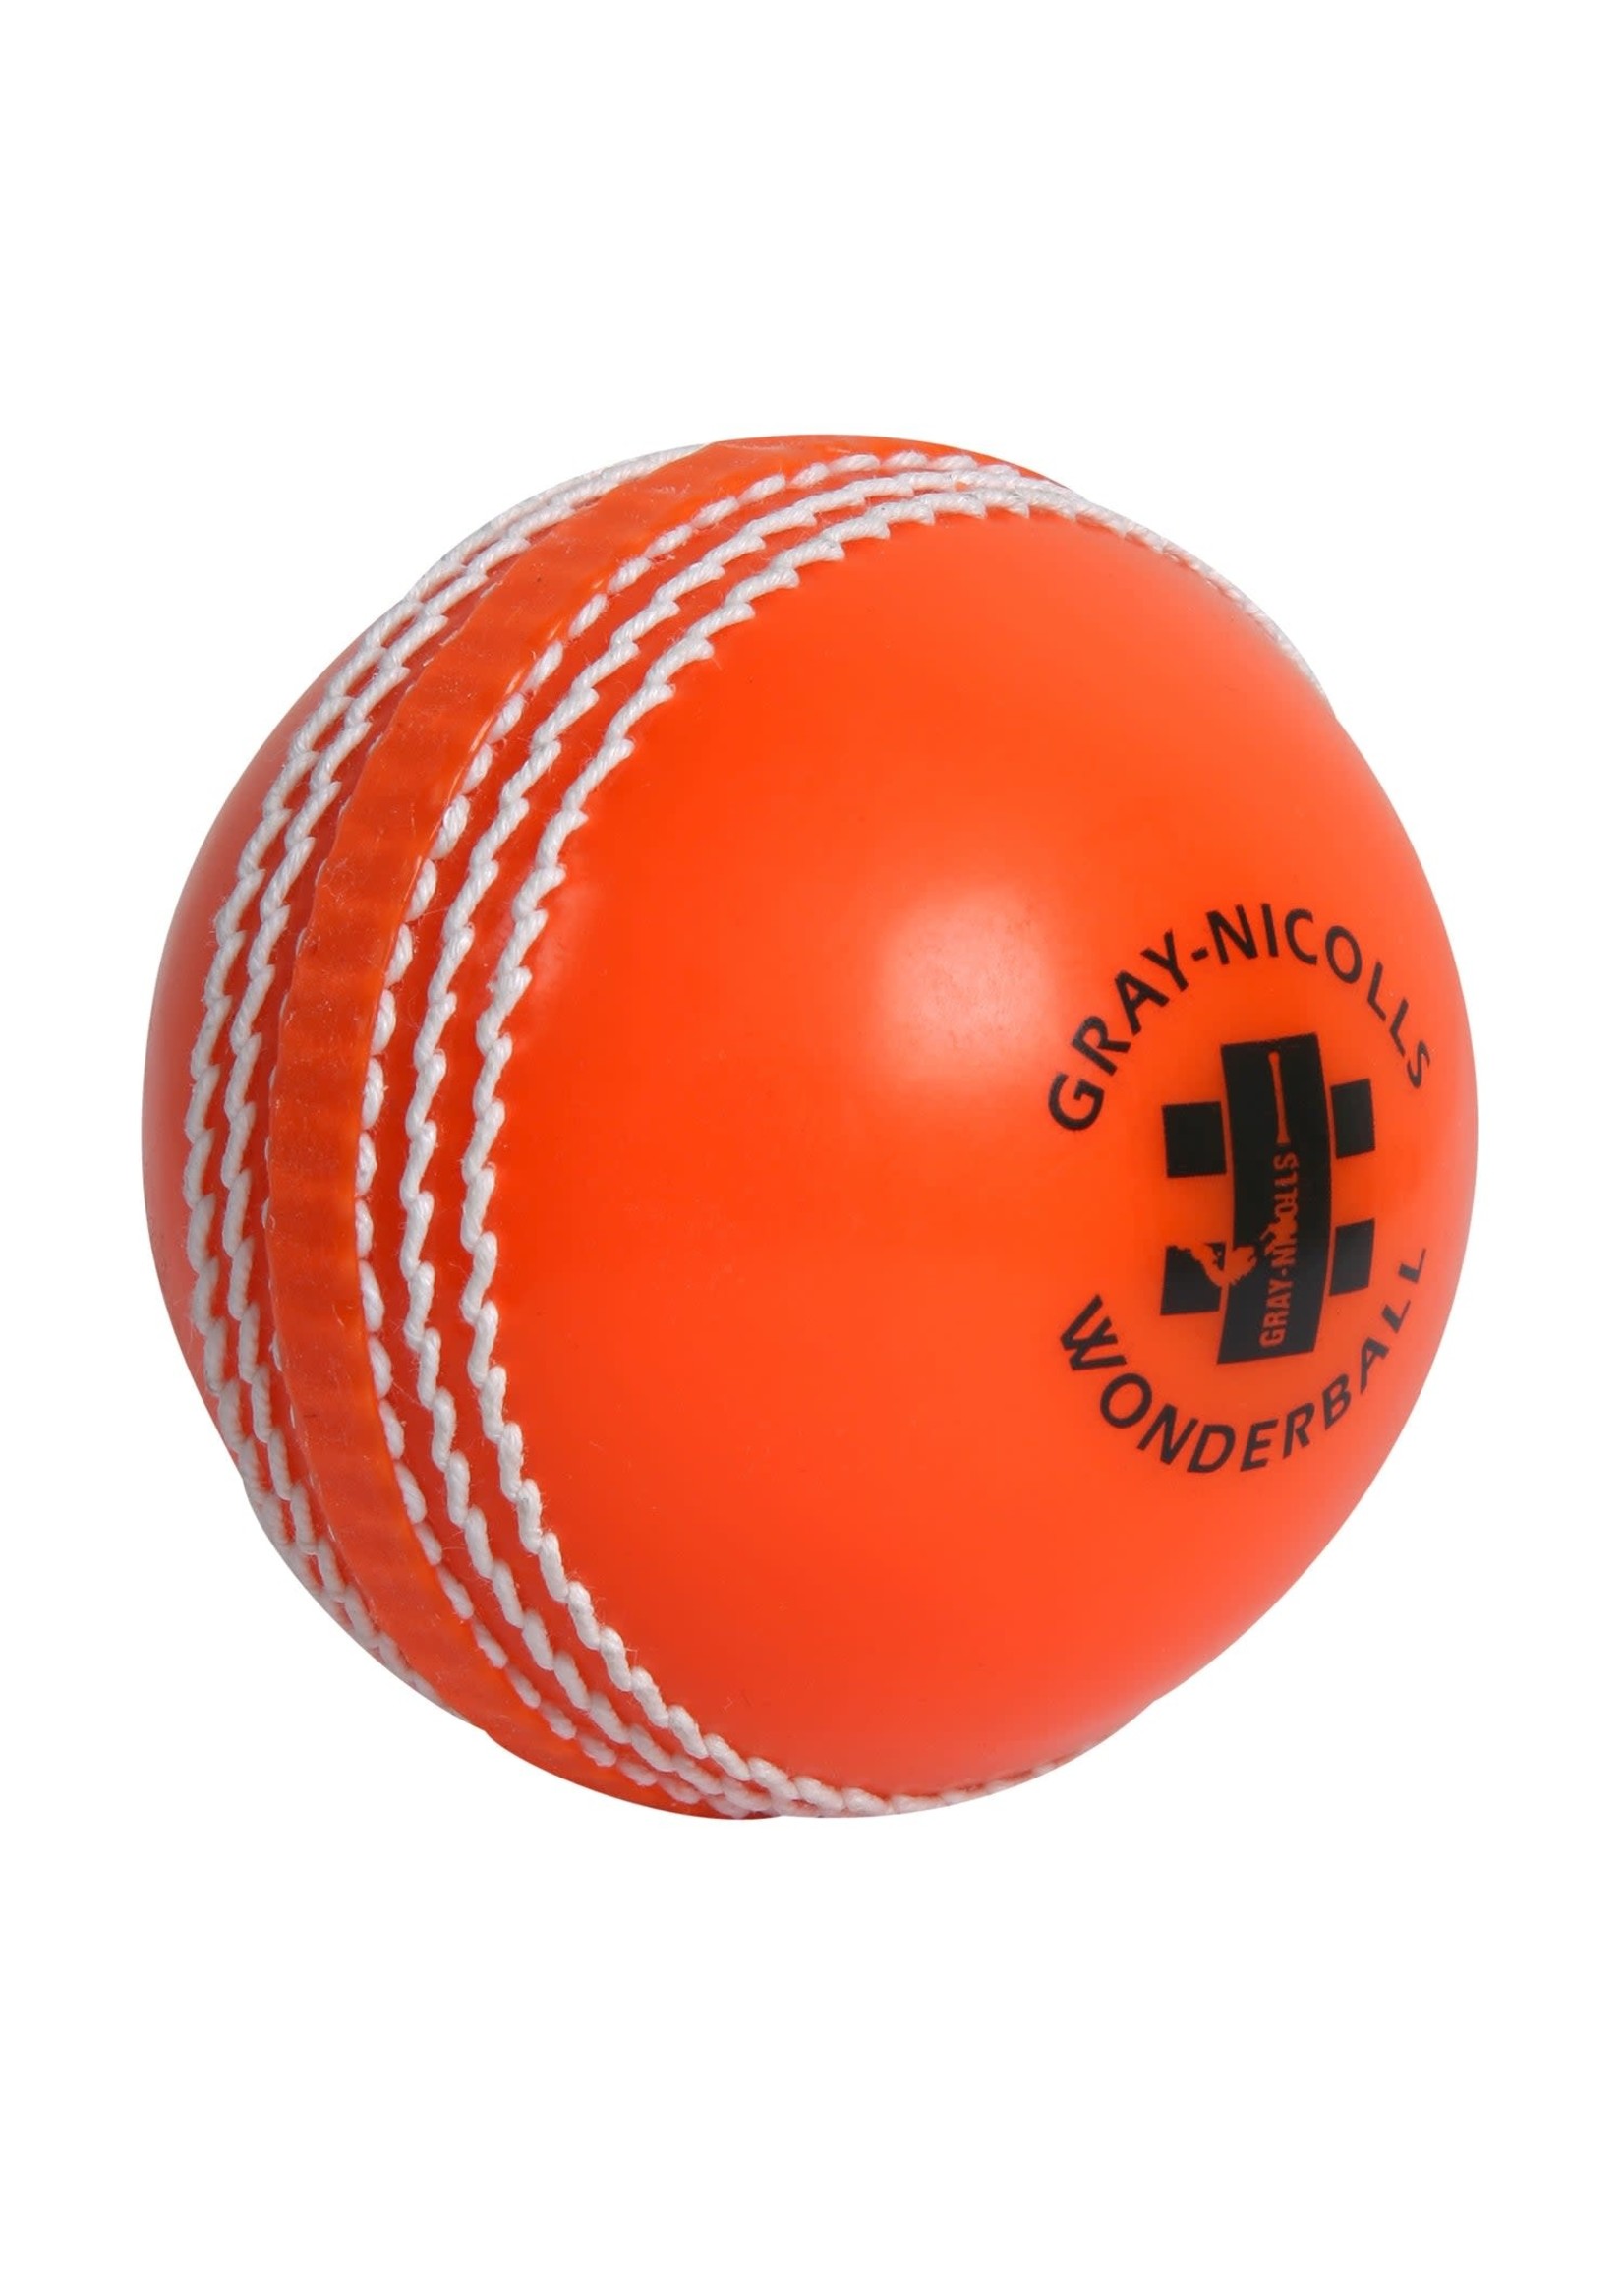 Gray-Nicolls Gray Nicolls Wonderball Cricket Ball